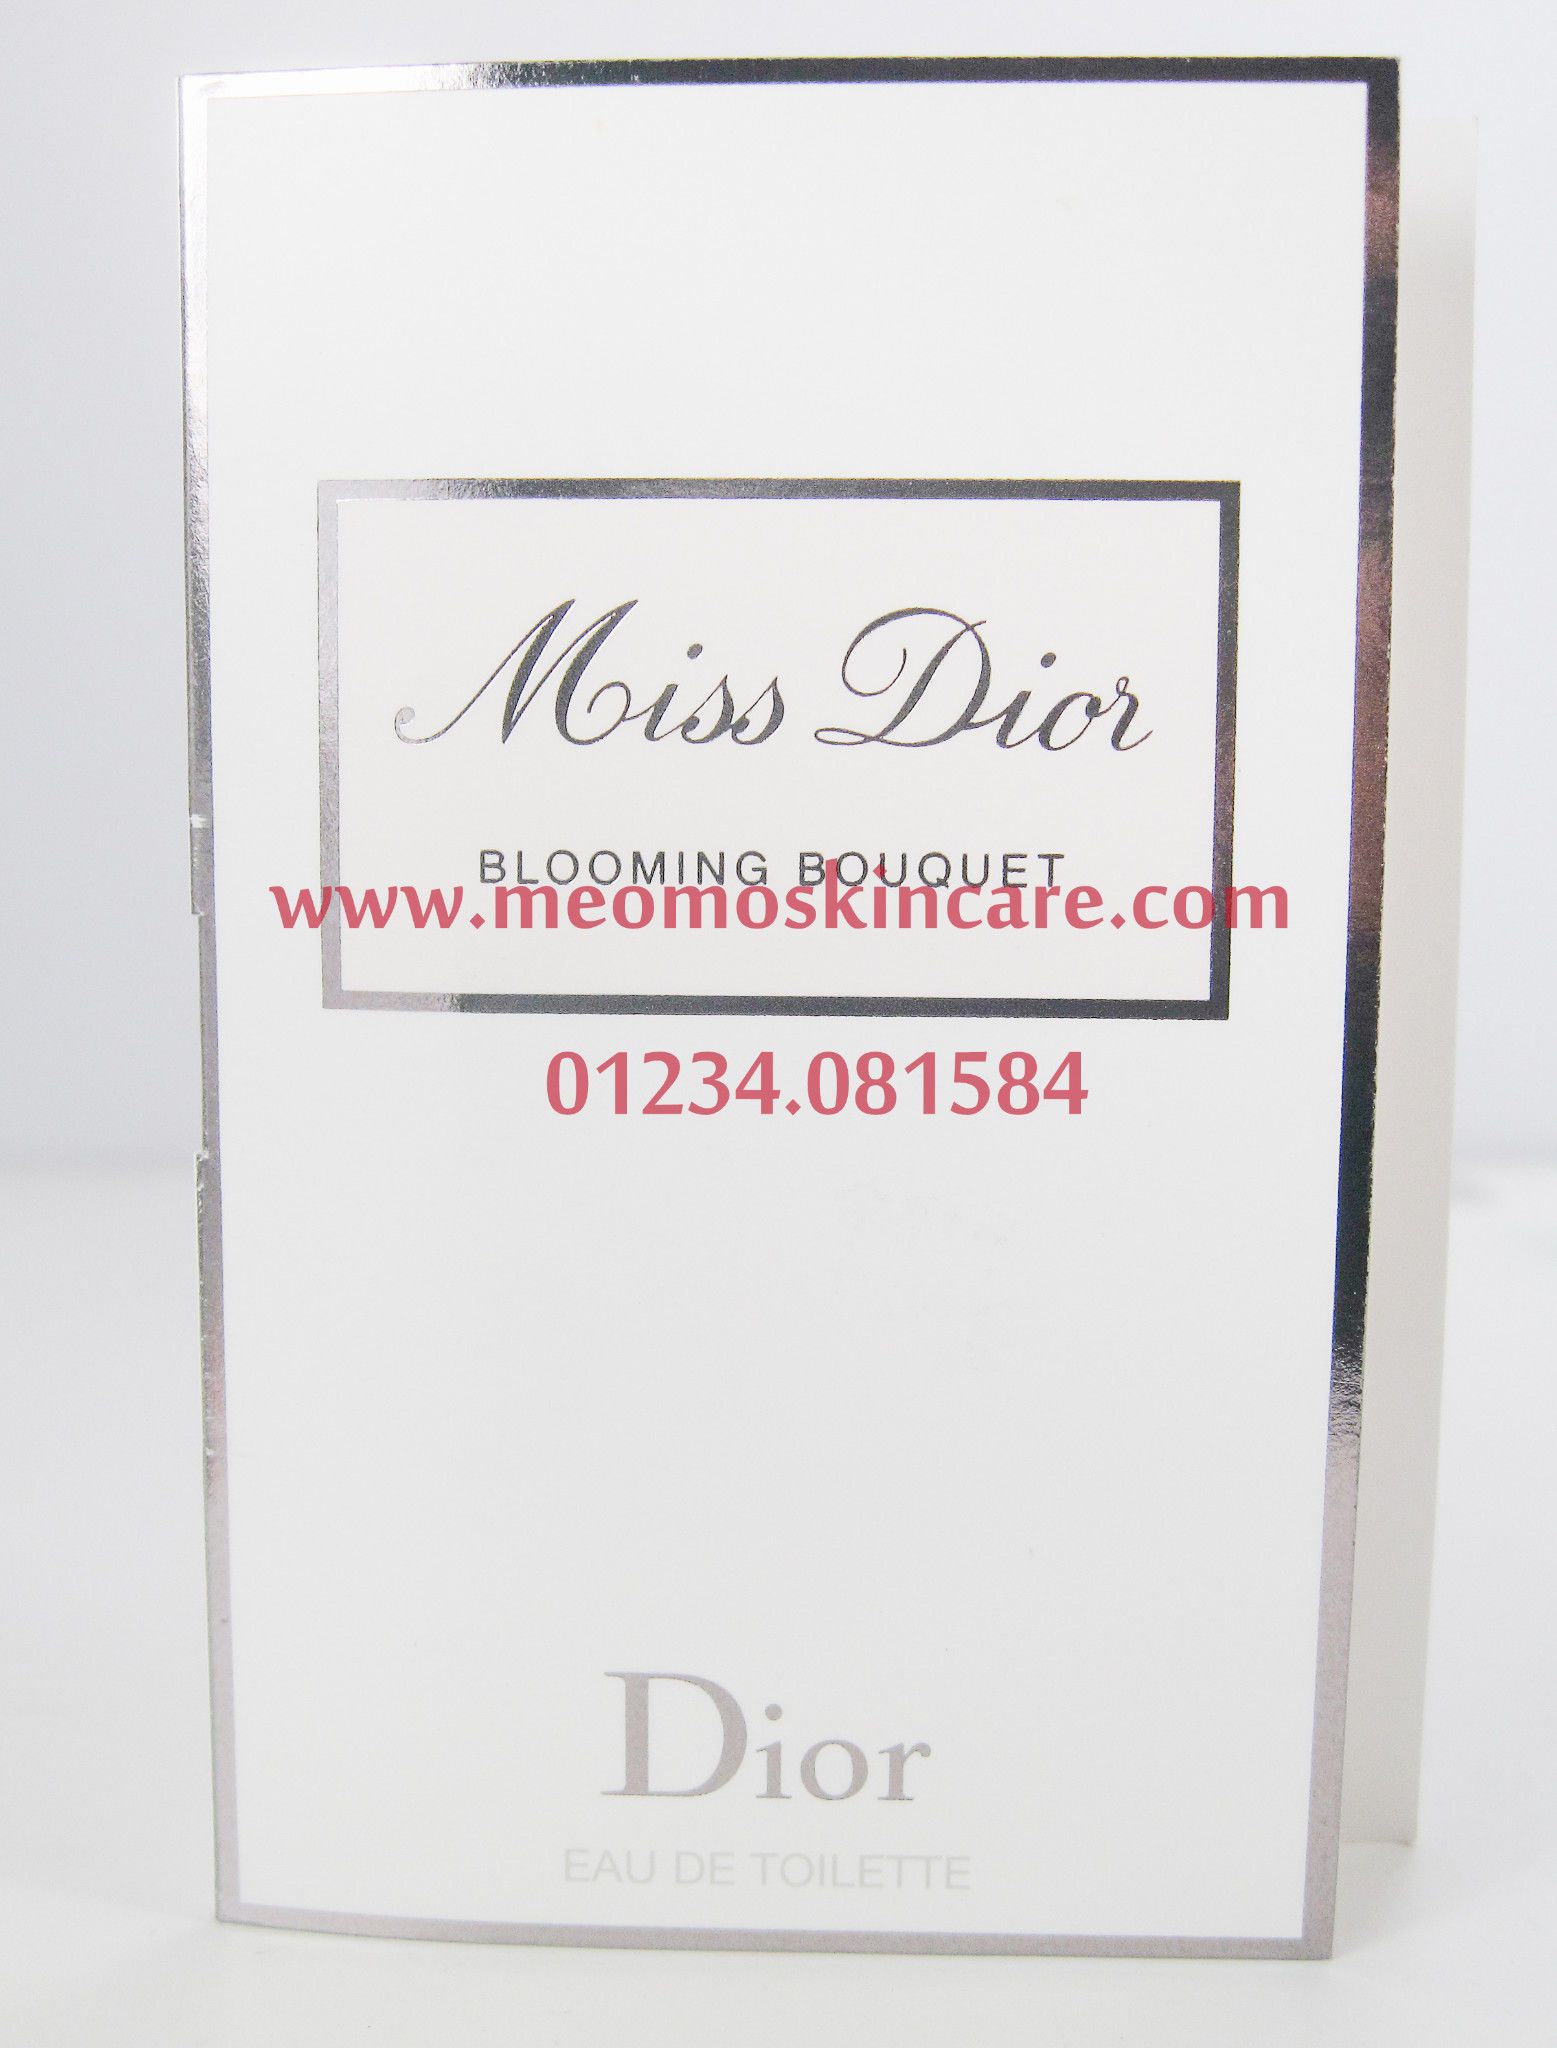 Dior - Miss Dior Blooming Bouquet - 1ml